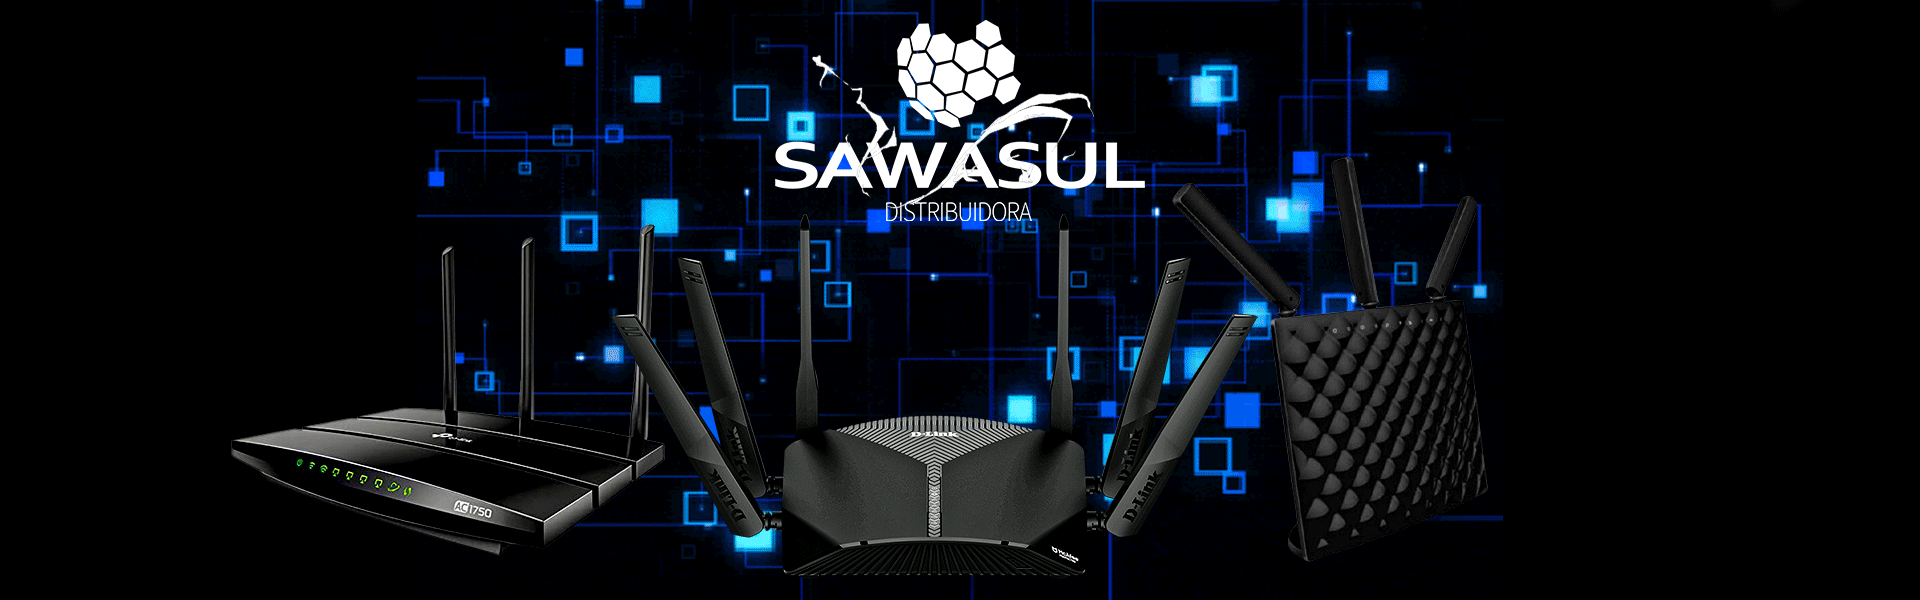 Sawasul Distribuidora - SAWASUL SKILLS